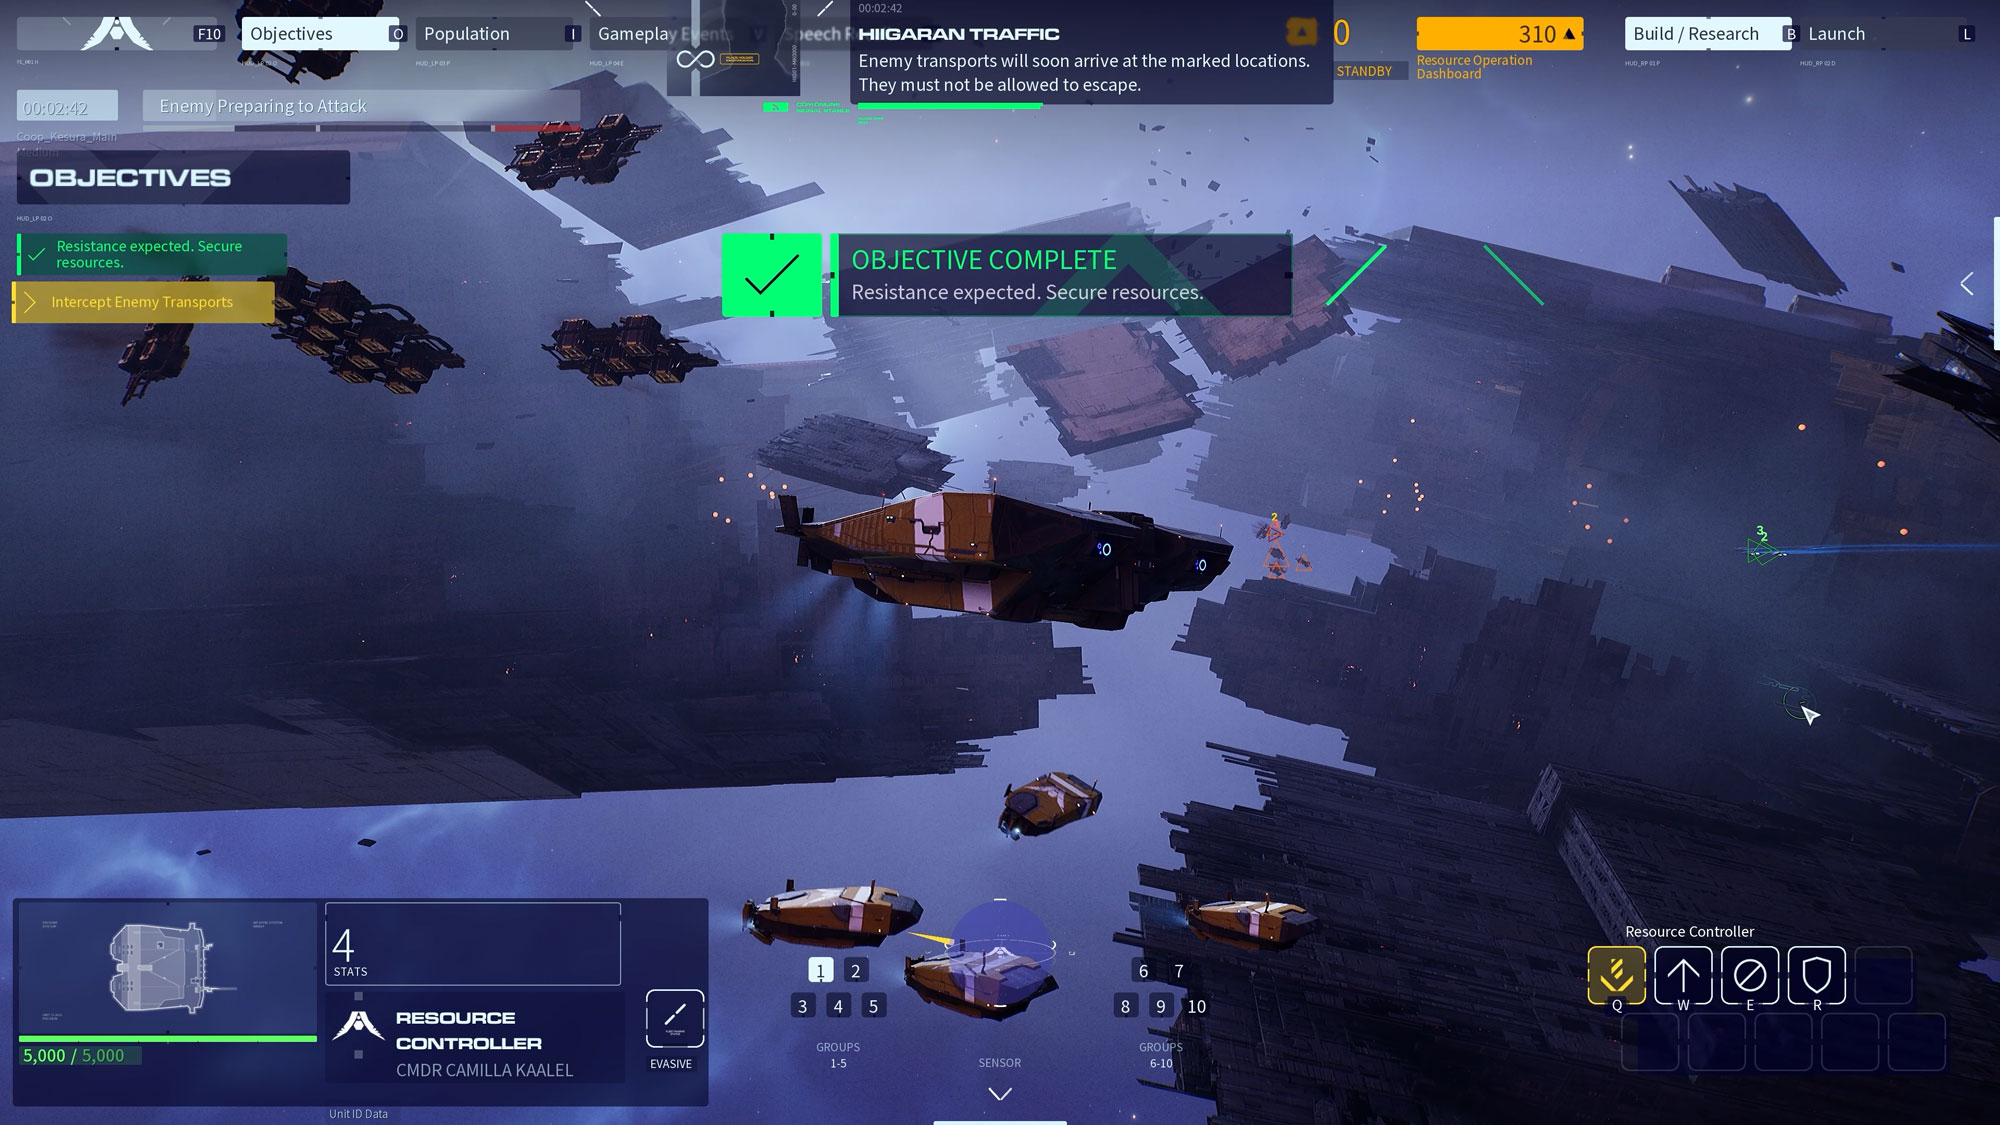 Captura de pantalla de Homeworld 3: War Games que muestra varias naves frente a una densa basura espacial.